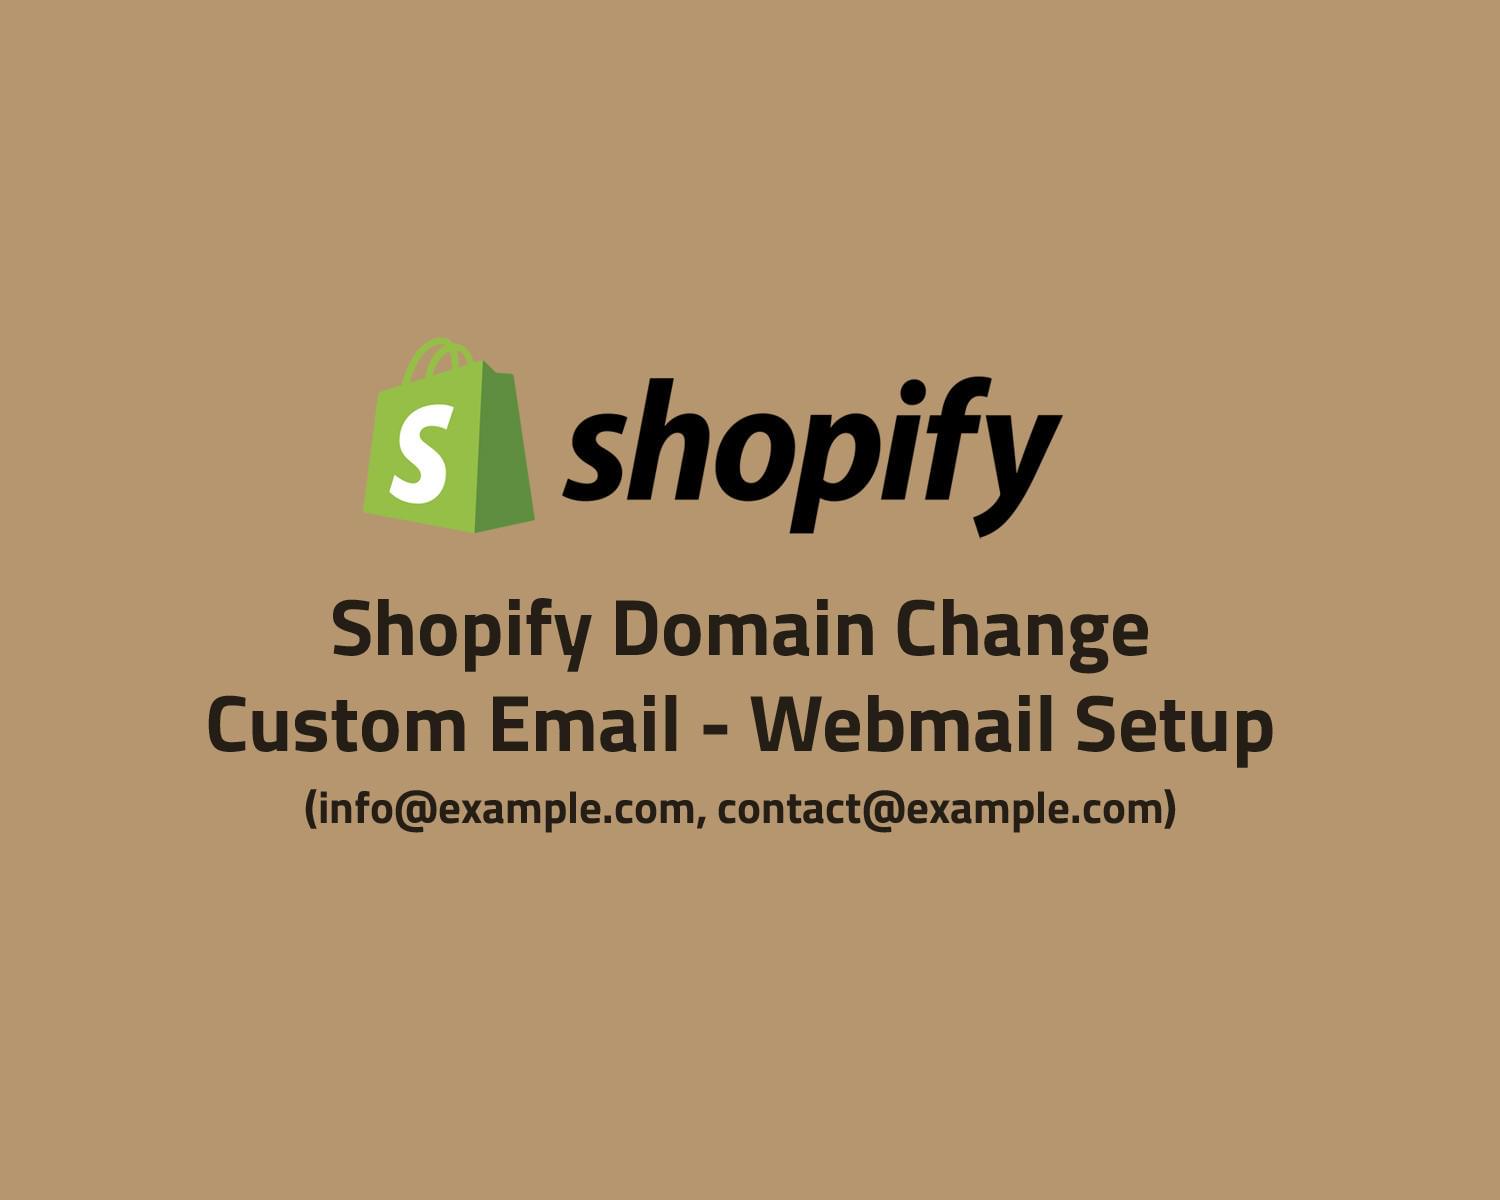 Shopify Domain Change / Custom Email